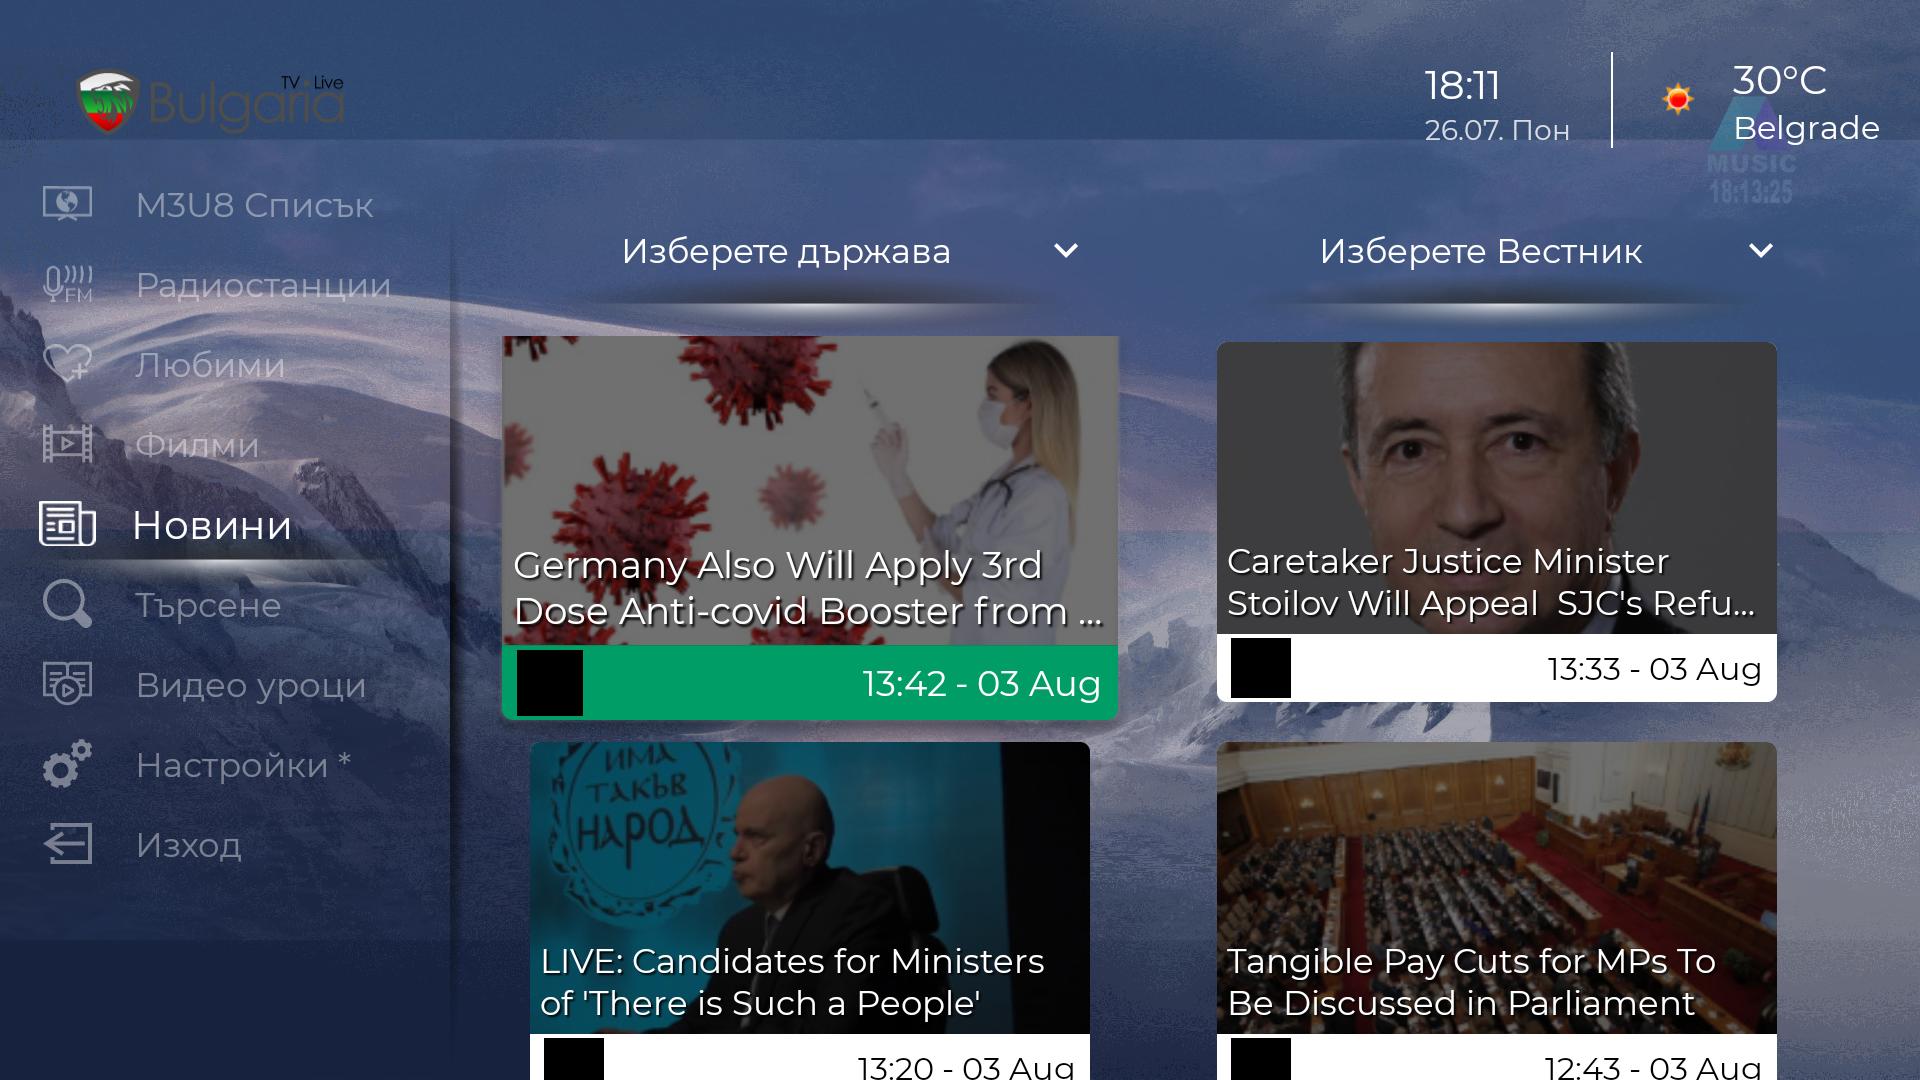 Bulgaria Live 1.2.04 Screenshot 16